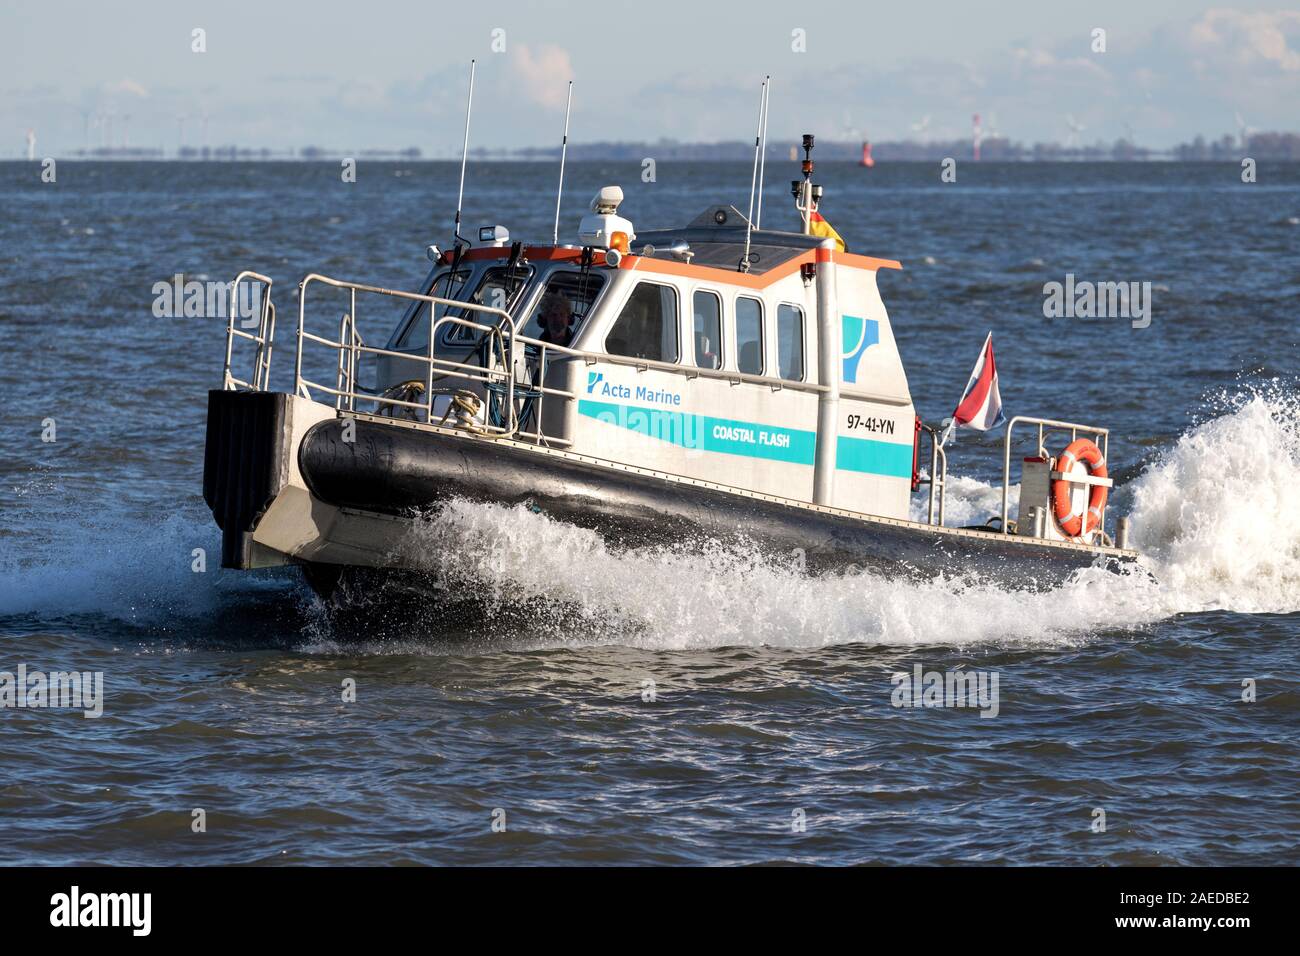 Acta Marine crew tender COASTAL FLASH on the river Elbe Stock Photo